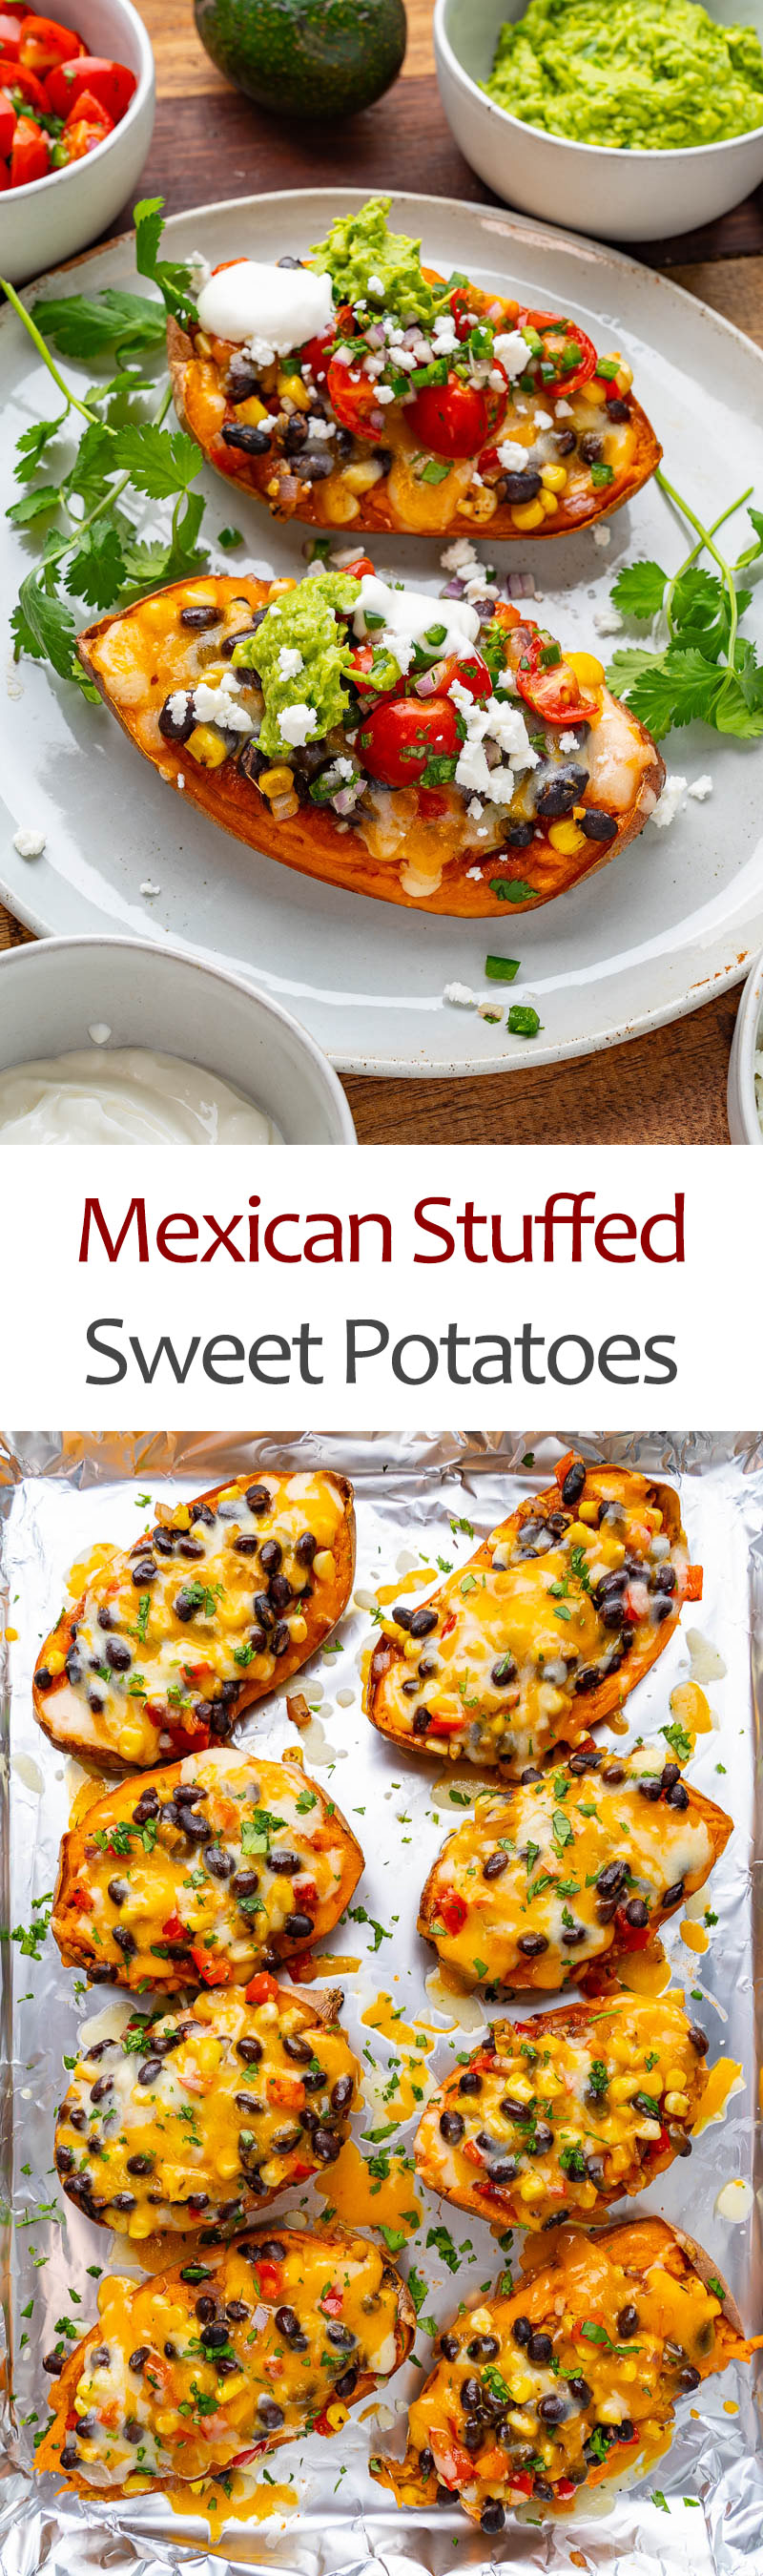 Mexican Stuffed Sweet Potatoes